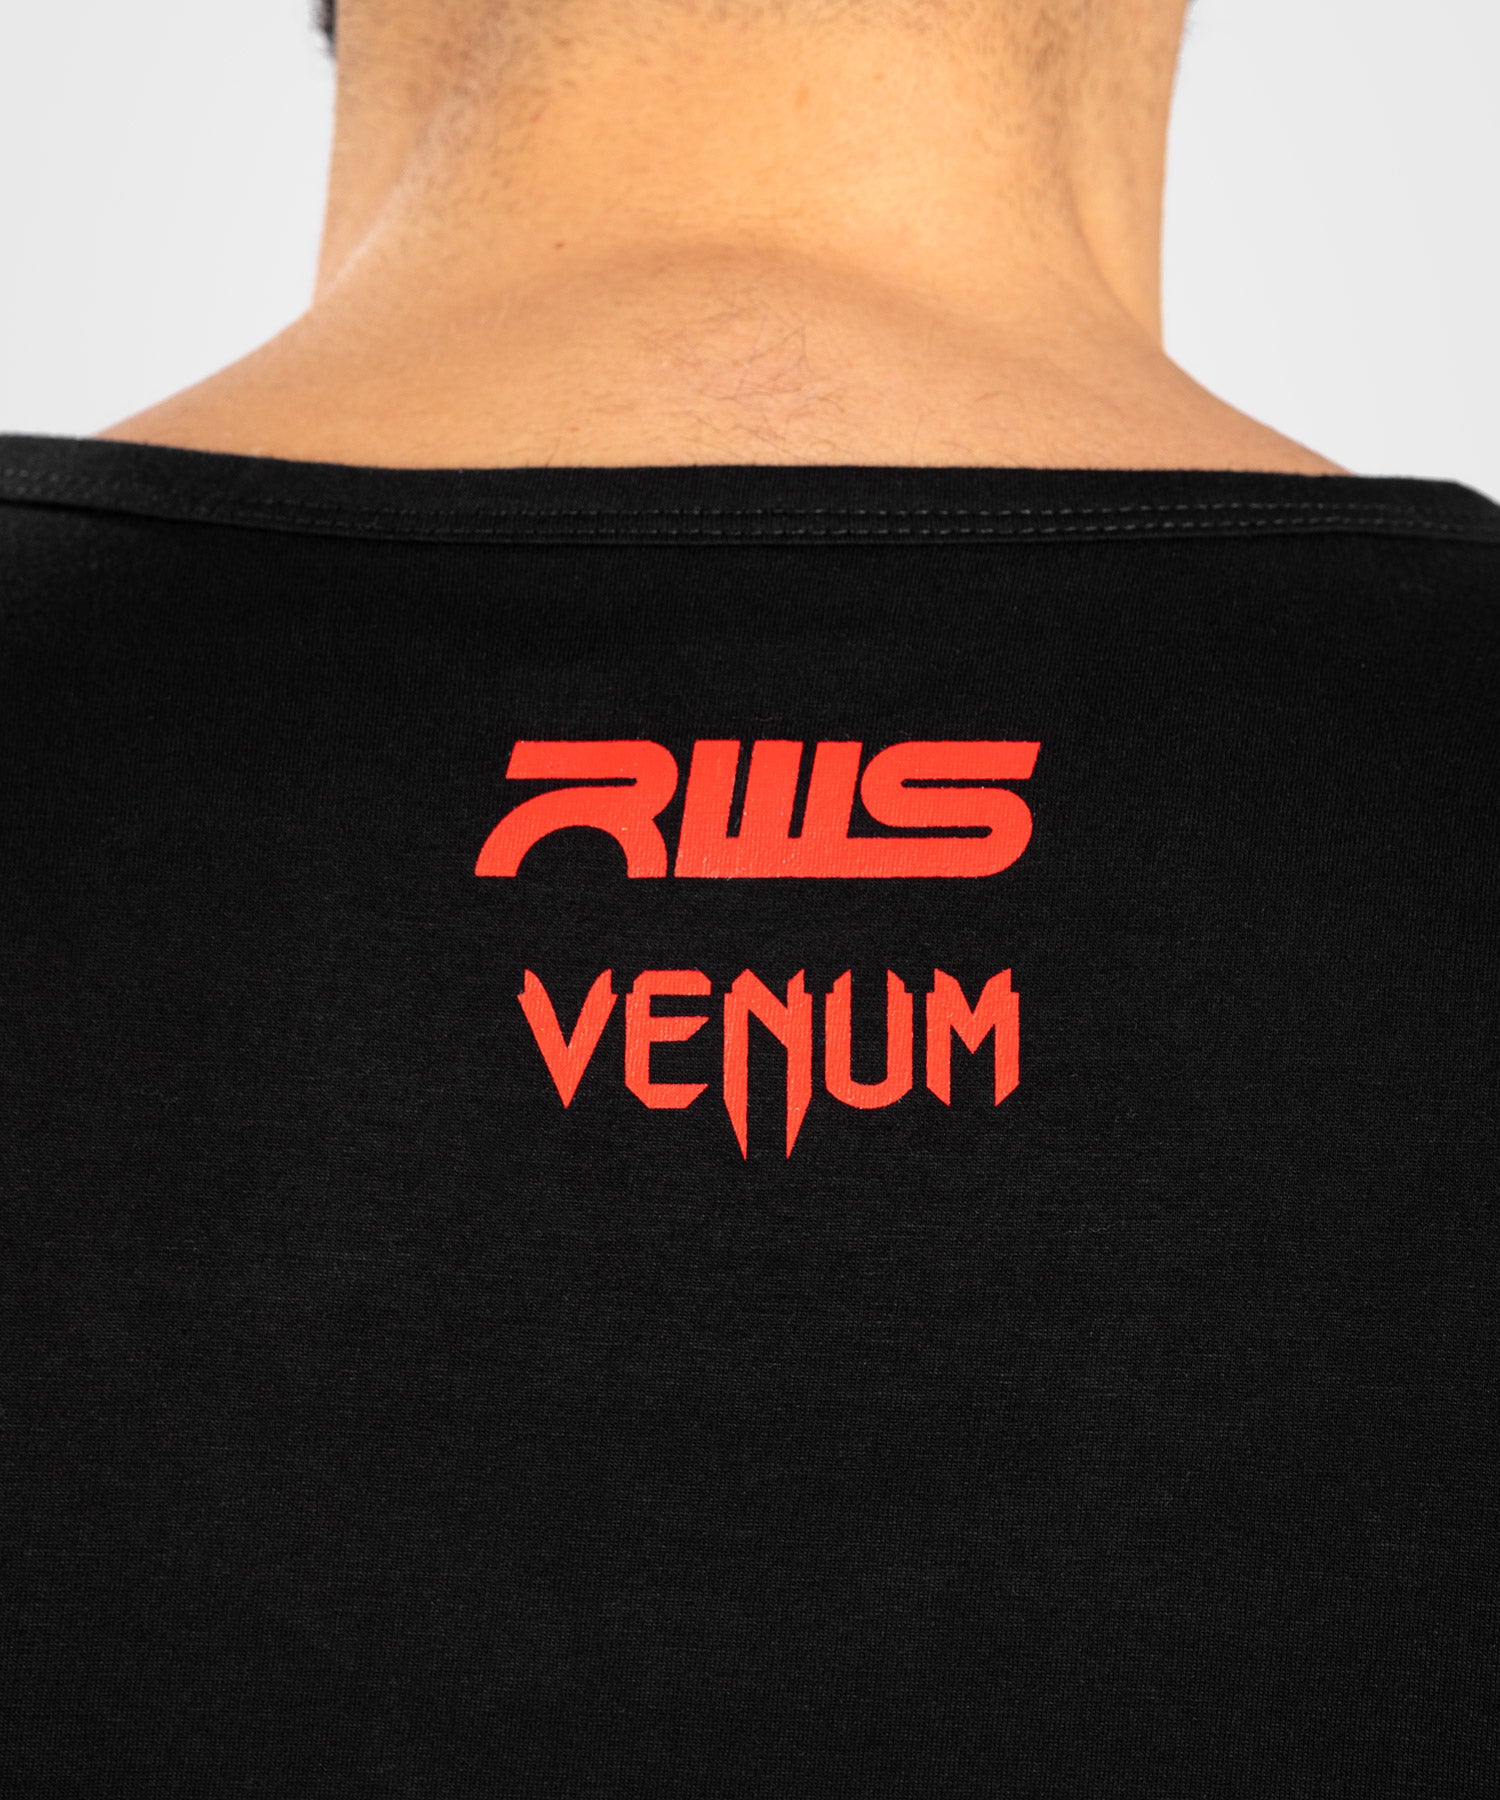 RWS x VENUM Tシャツ Mサイズ